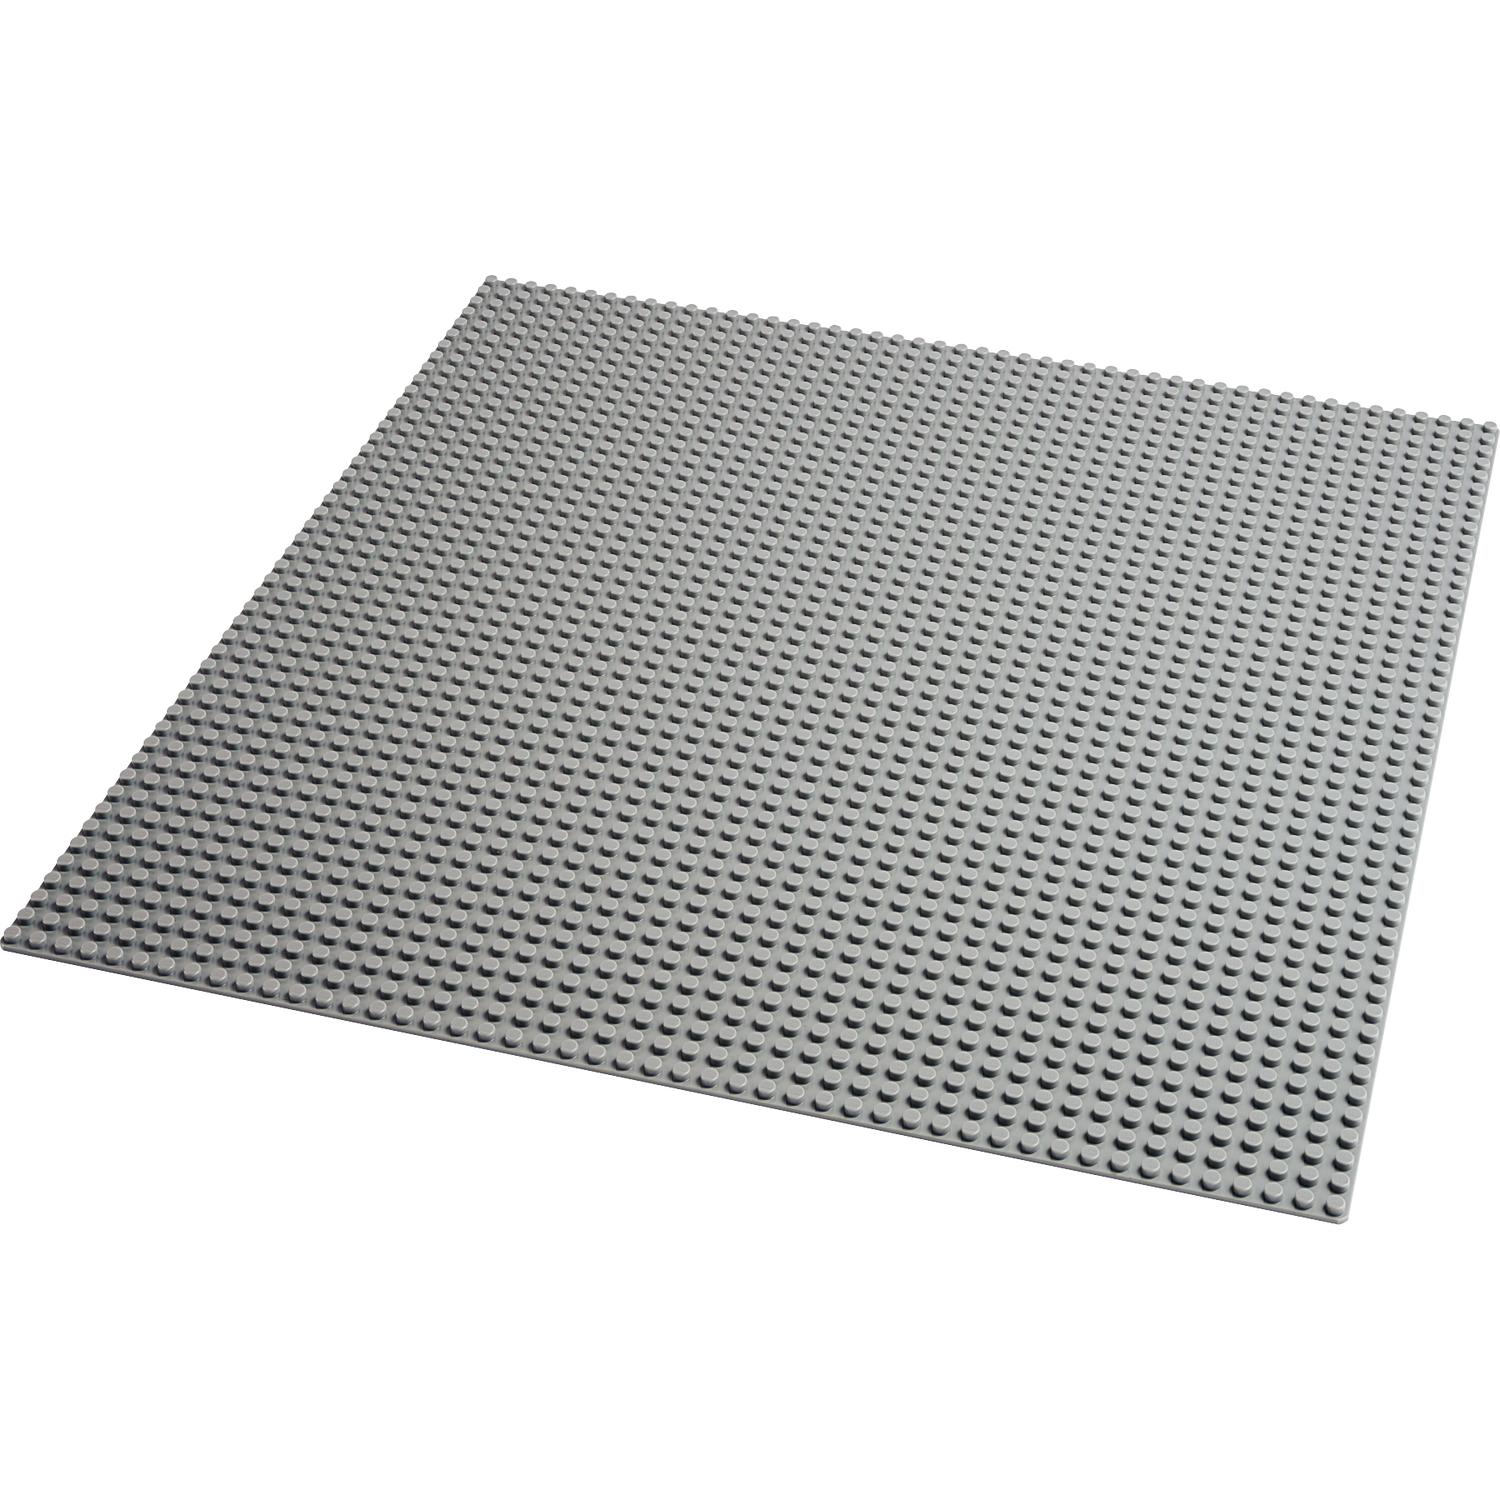 Jual LEGO® Classic Gray Baseplate - 11024